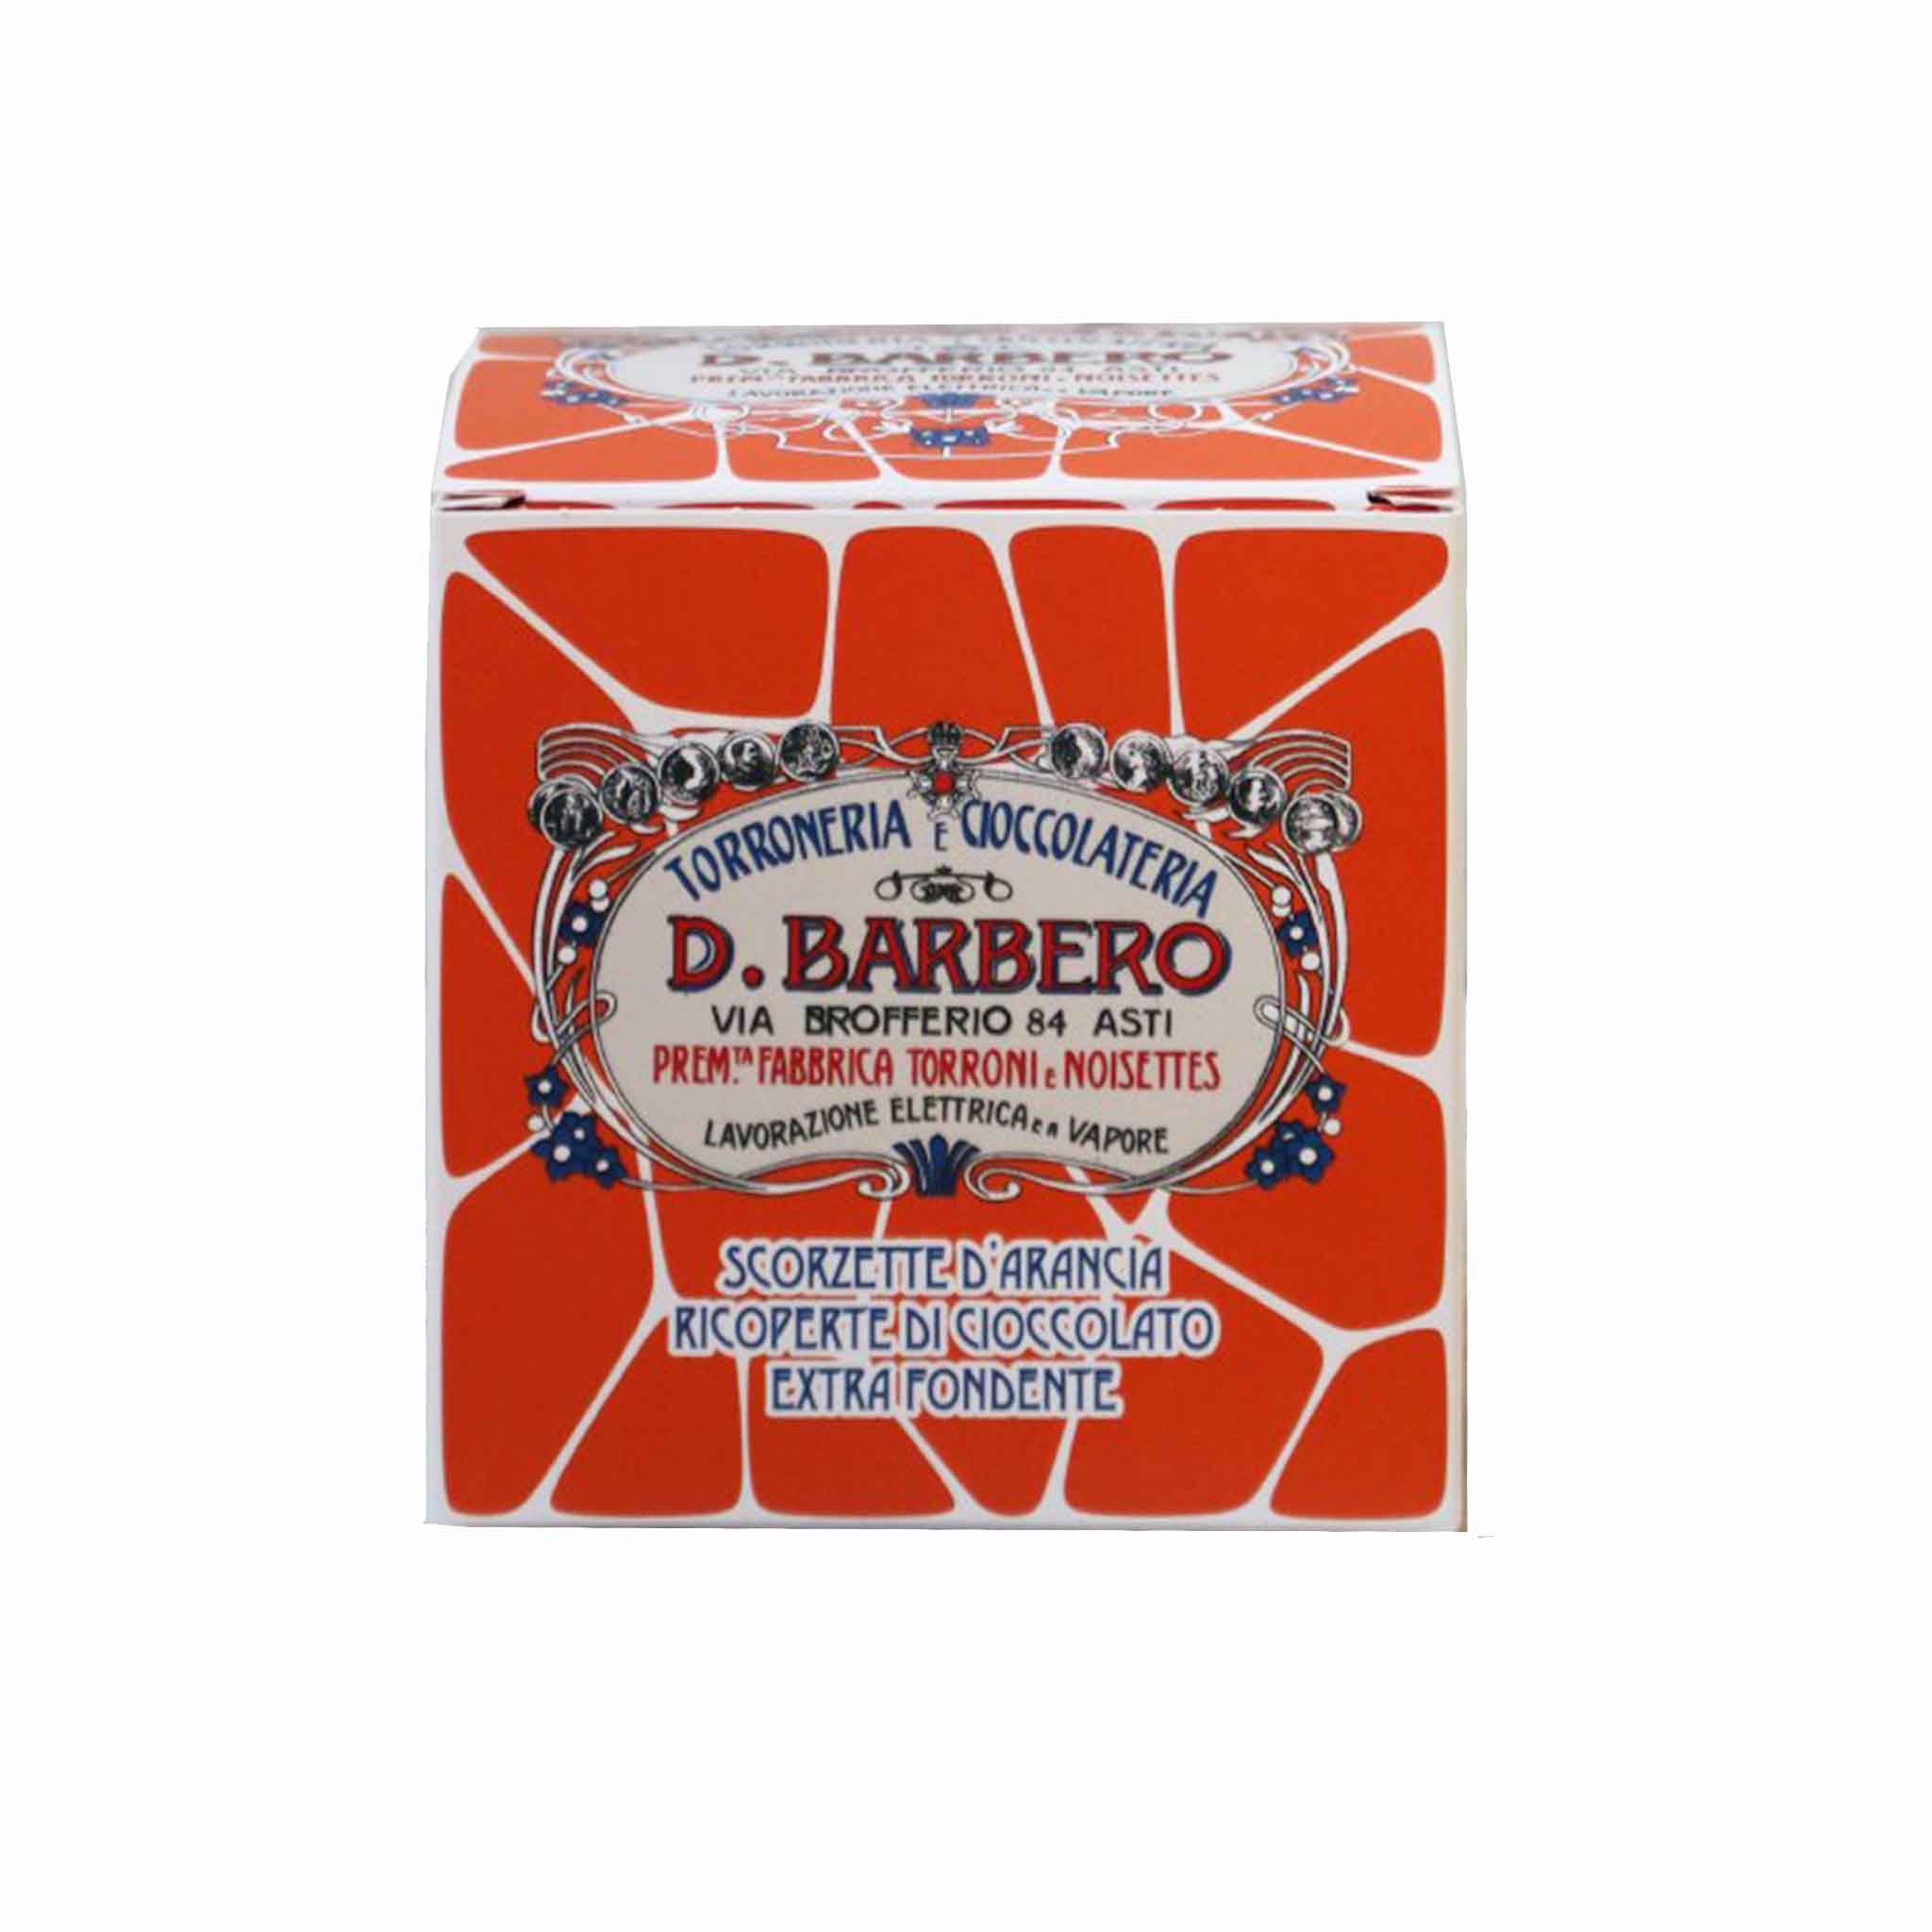 D. BARBERO CANDIED ORANGE PEEL COVERED IN DARK CHOCOLATE 150g